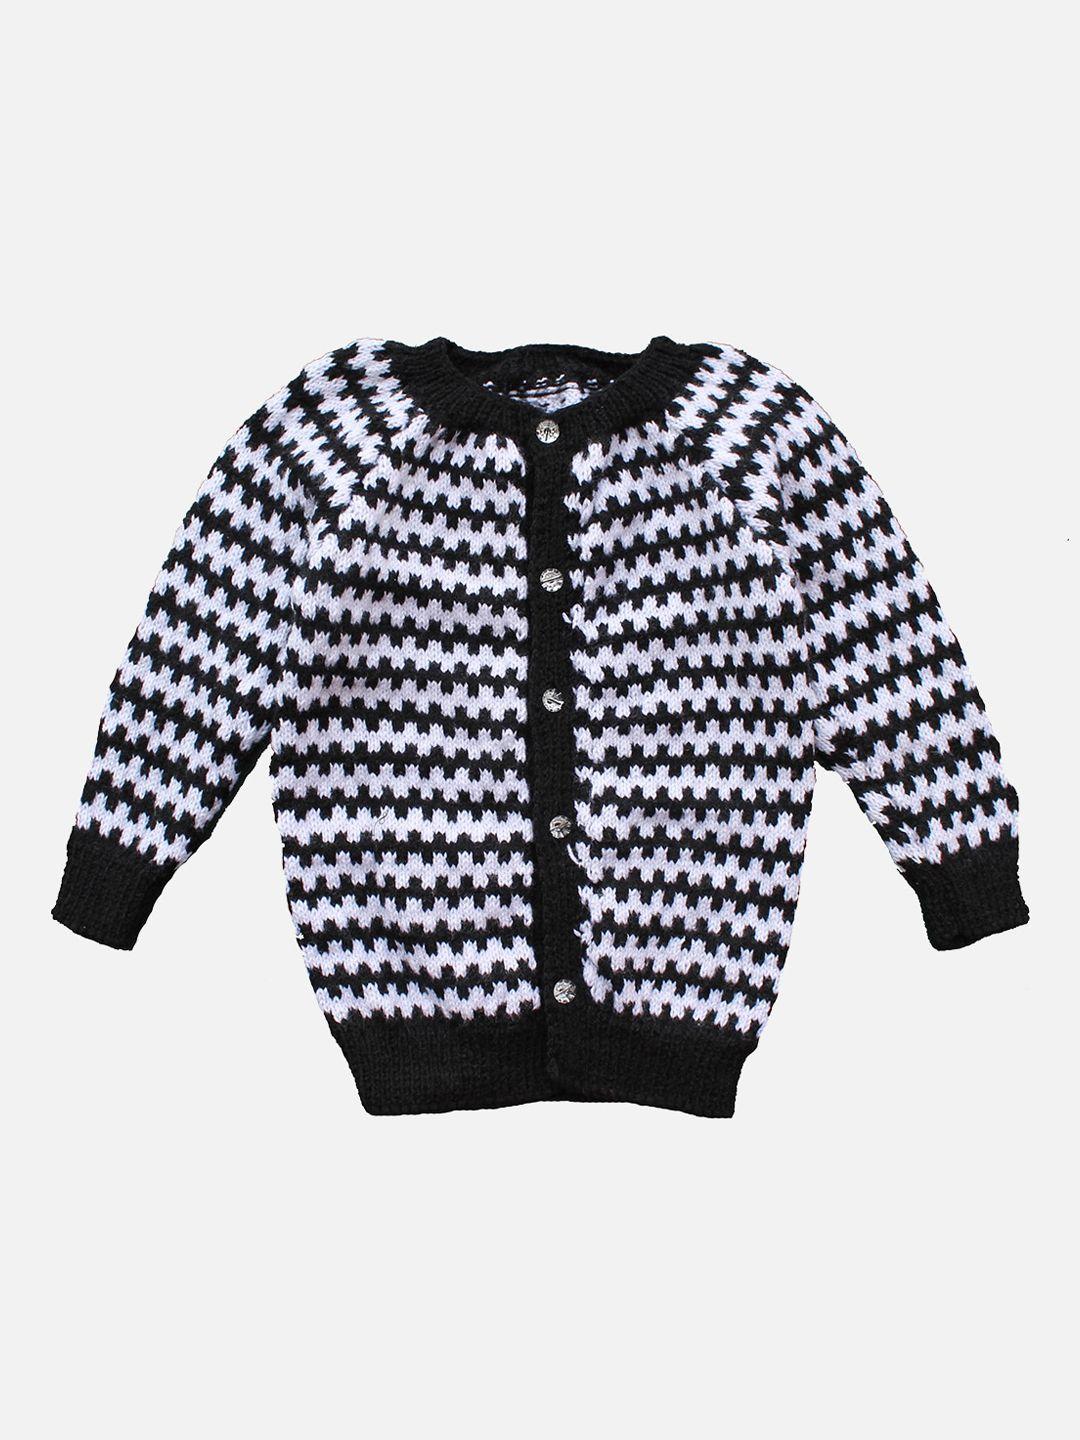 woonie-unisex-kids-black-striped-cardigan-sweater